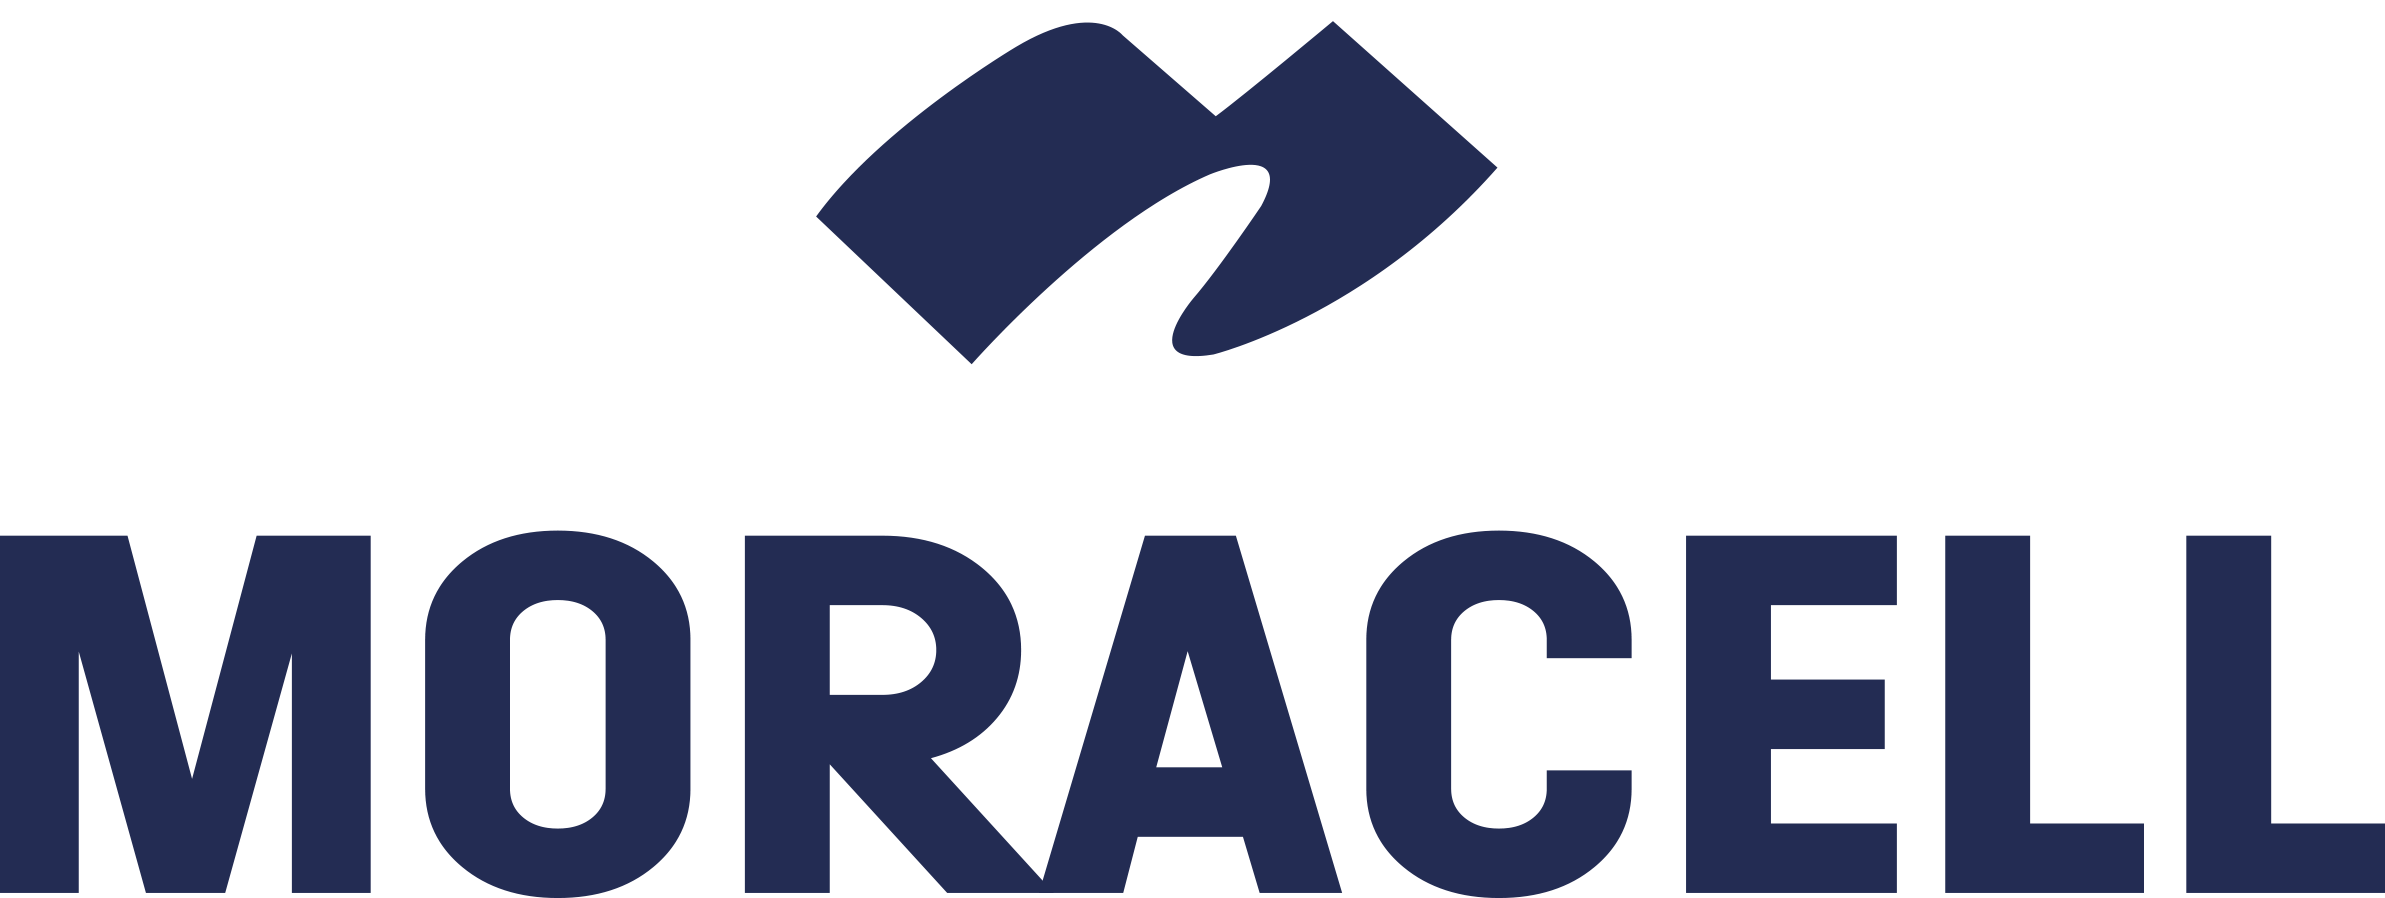 MORACELL logo